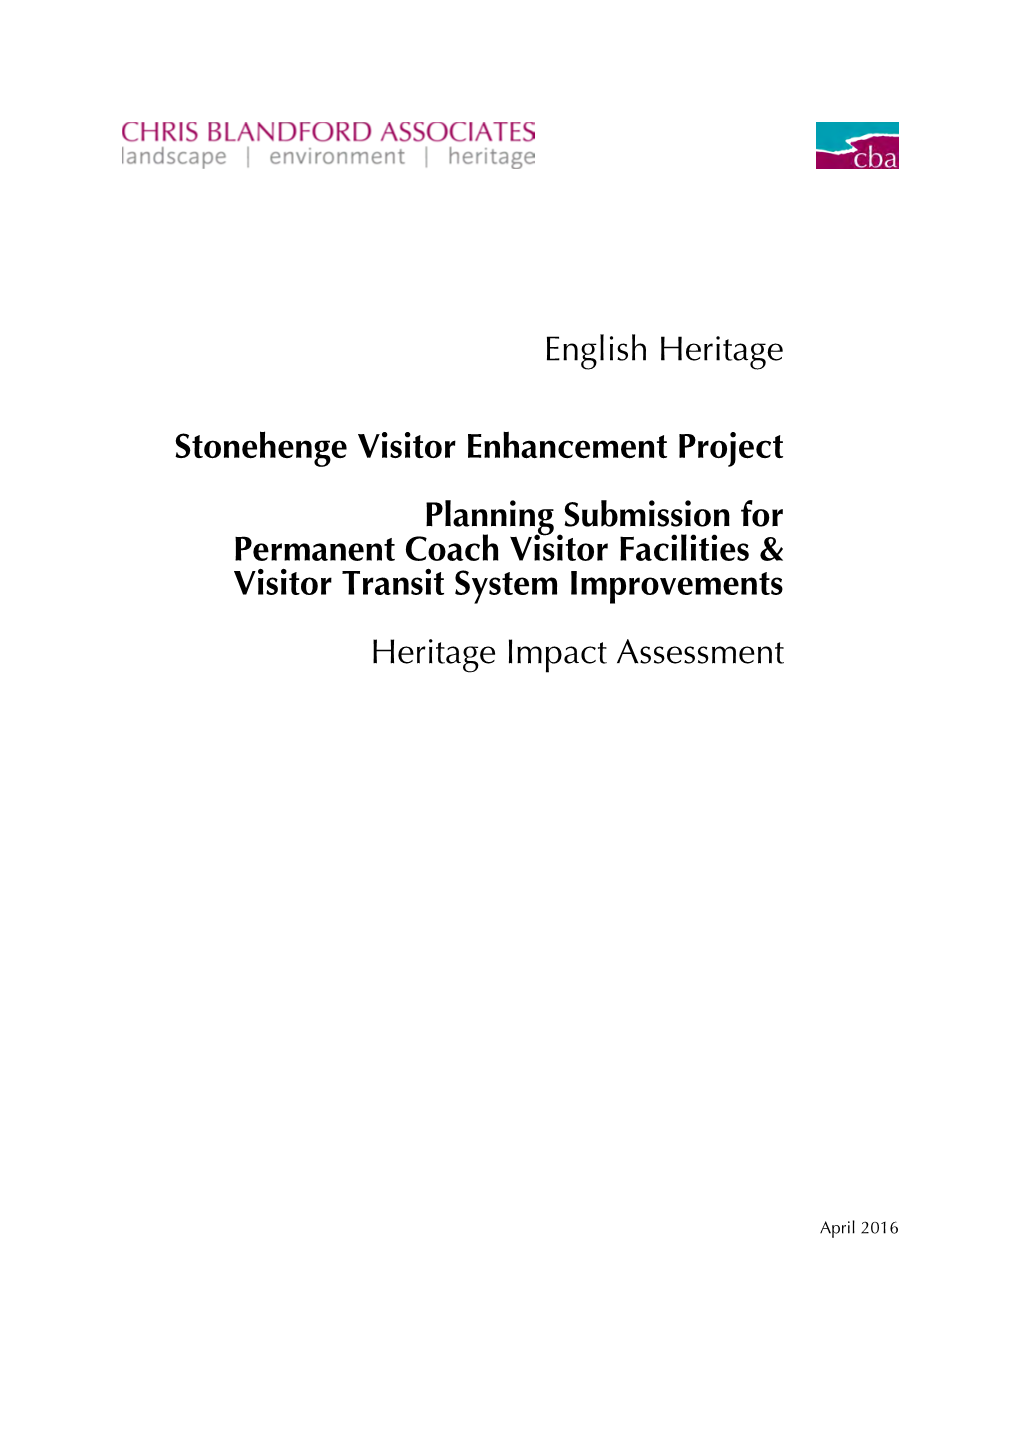 English Heritage Stonehenge Visitor Enhancement Project Planning